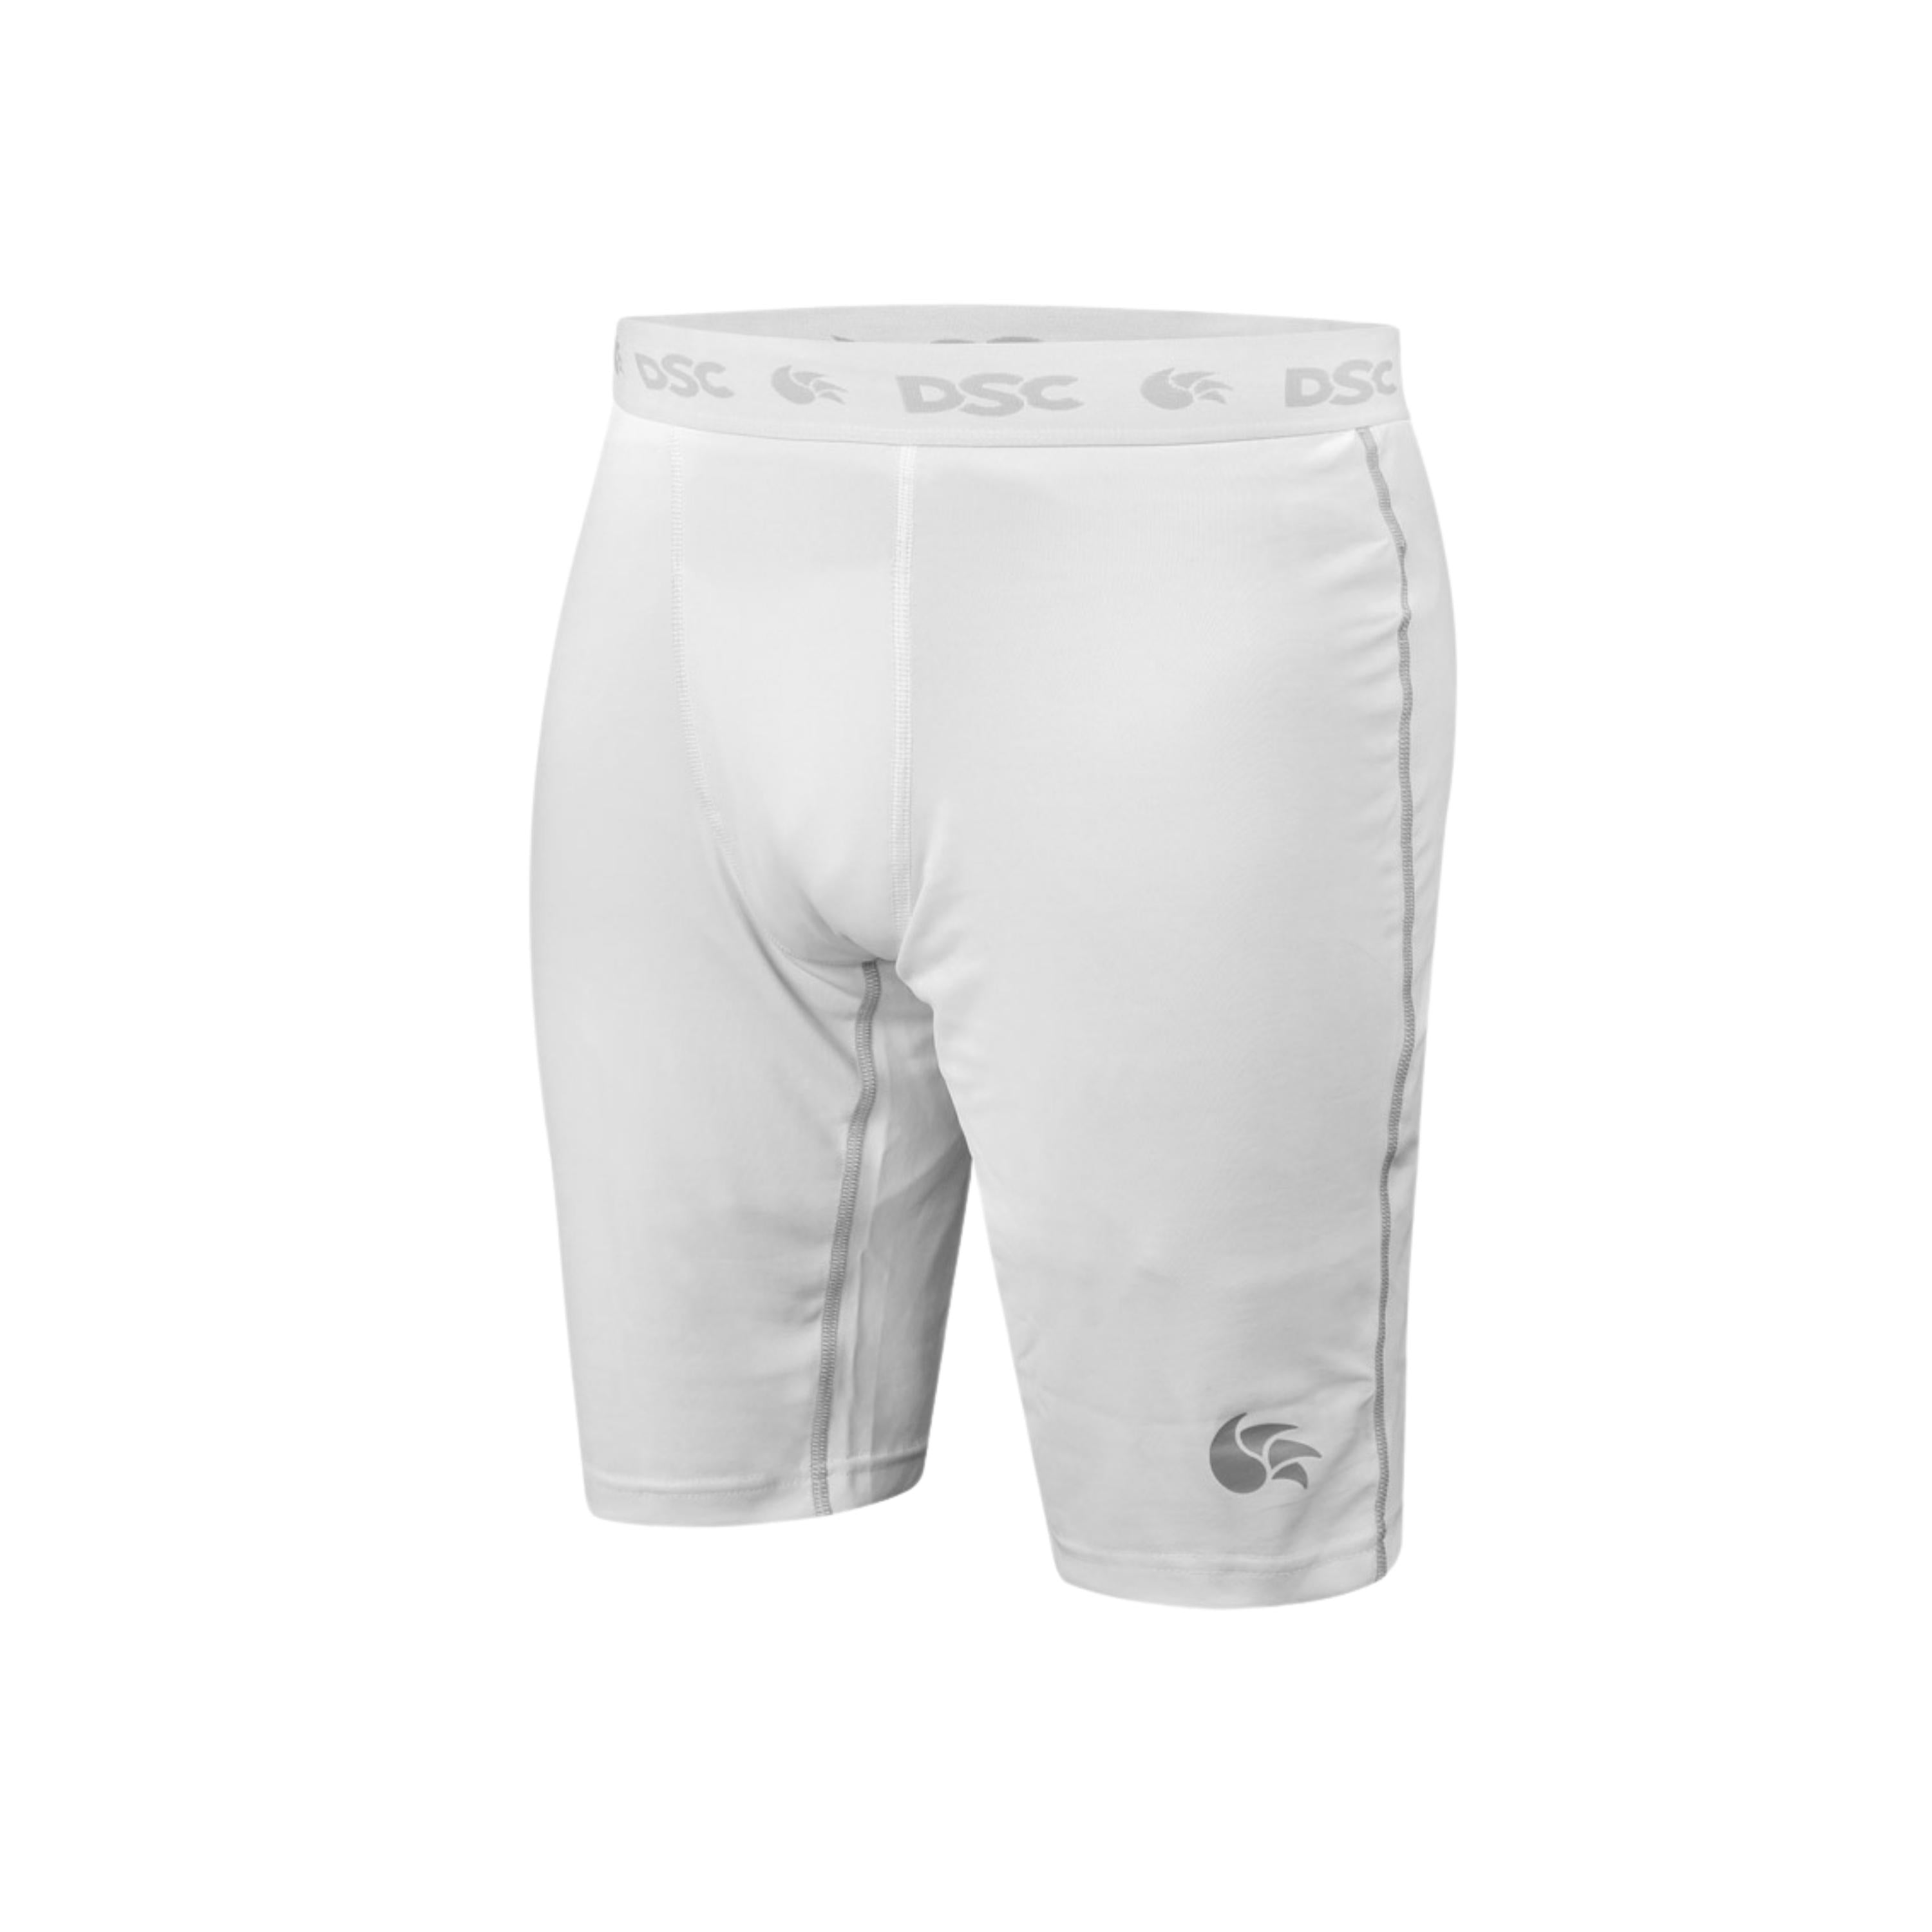 DSC Compression Half Thigh White Shorts